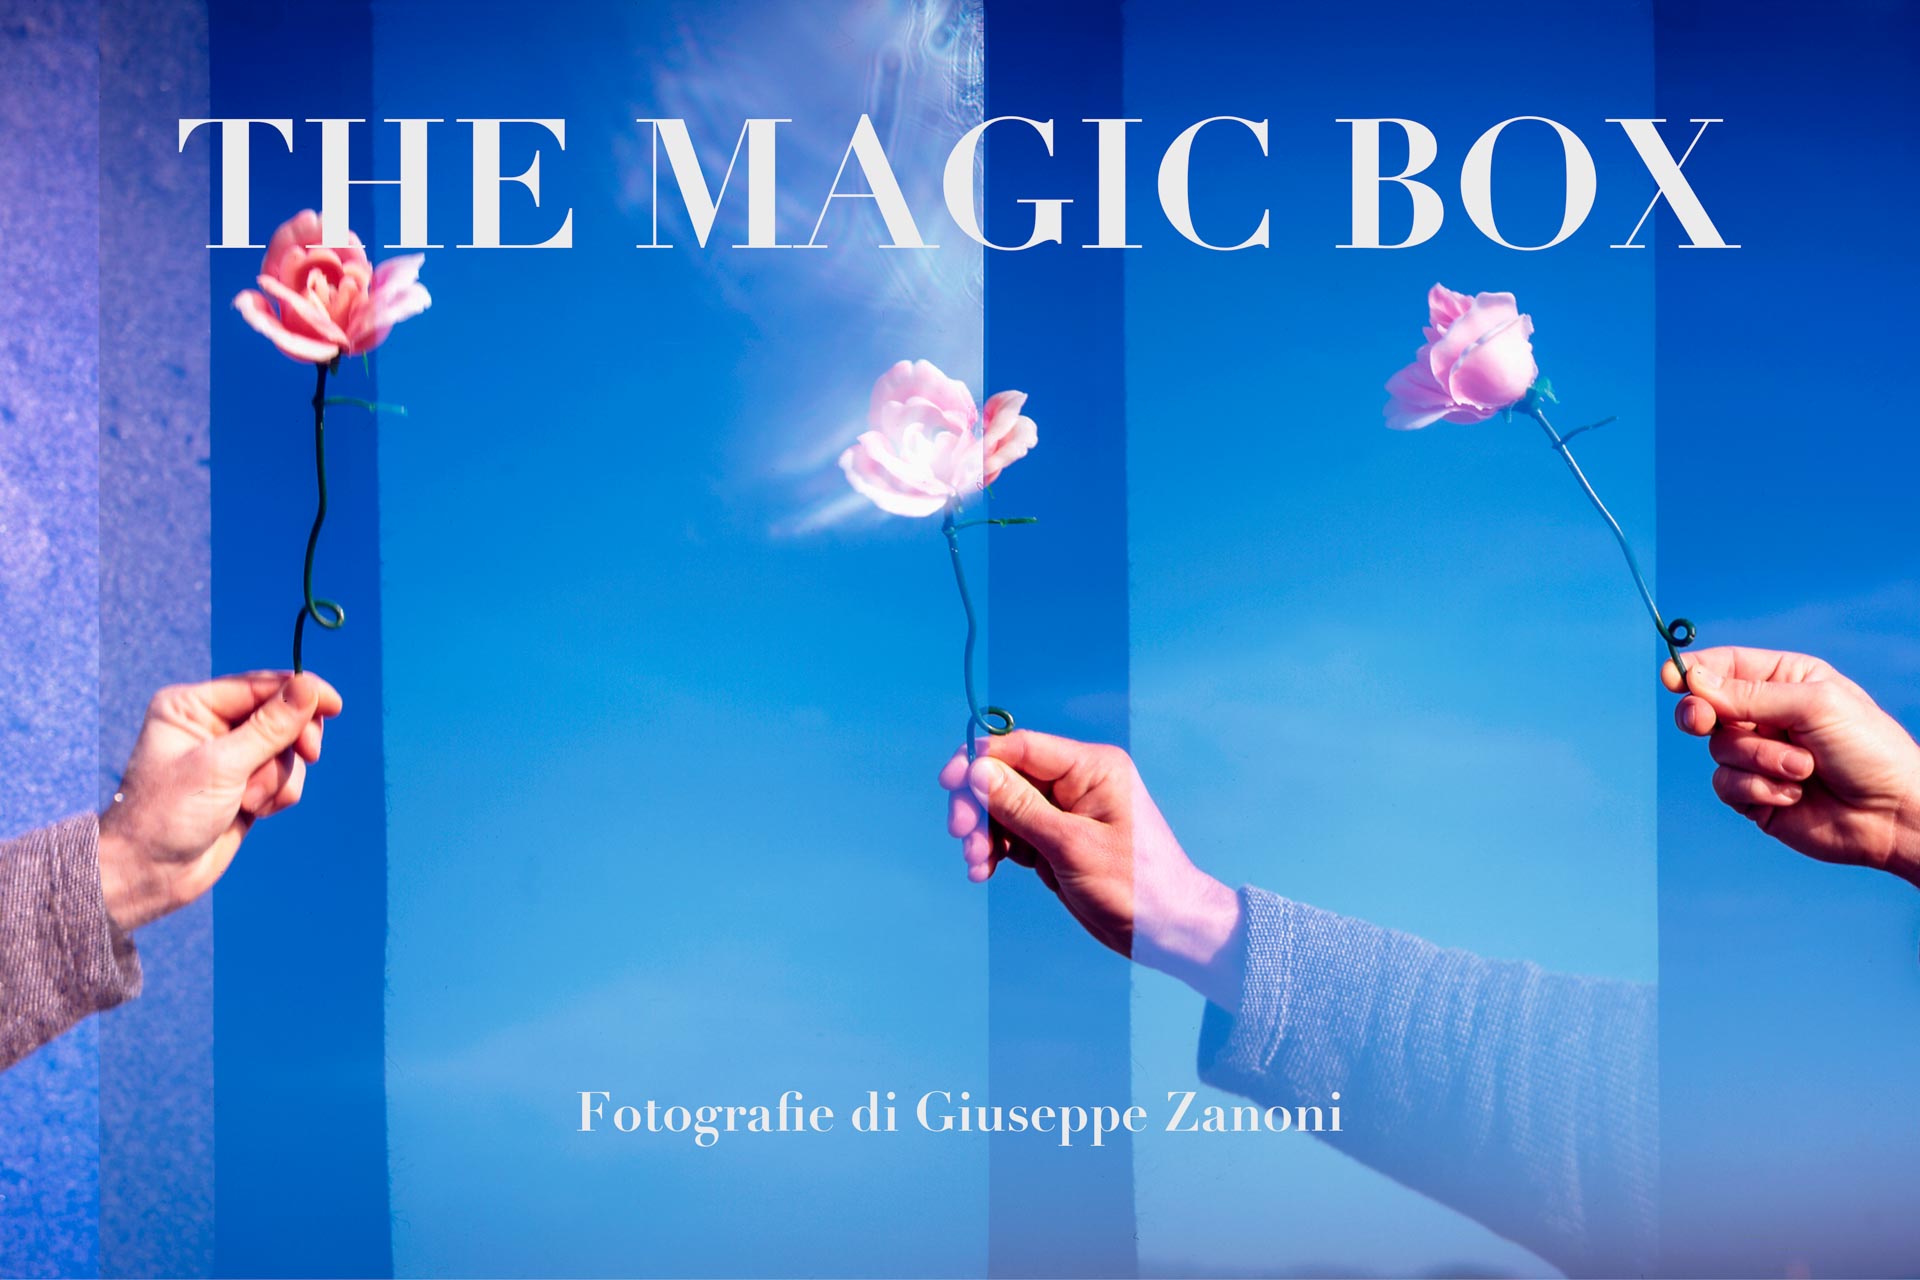 Photo book "THE MAGIC BOX" 20×30 cm